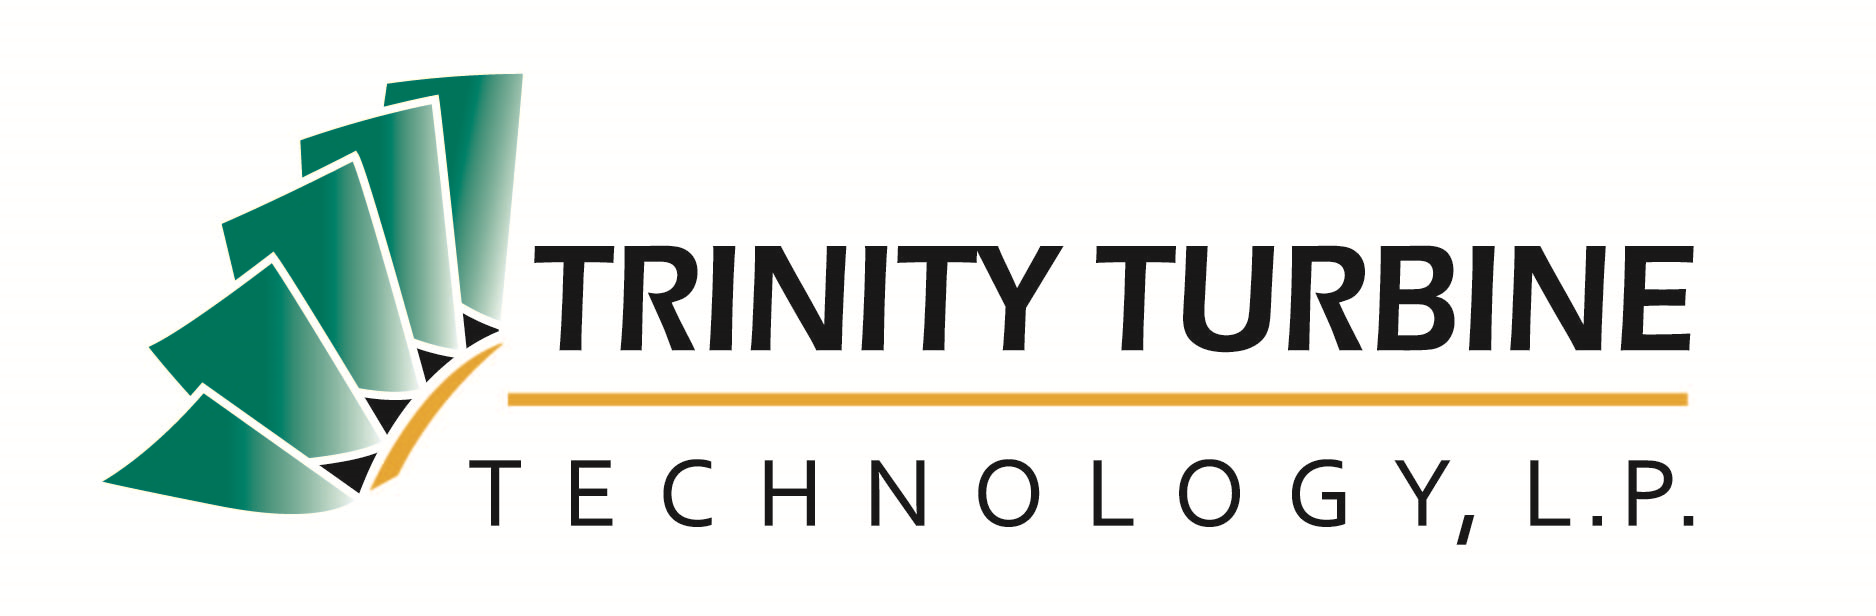 Trinity Turbine